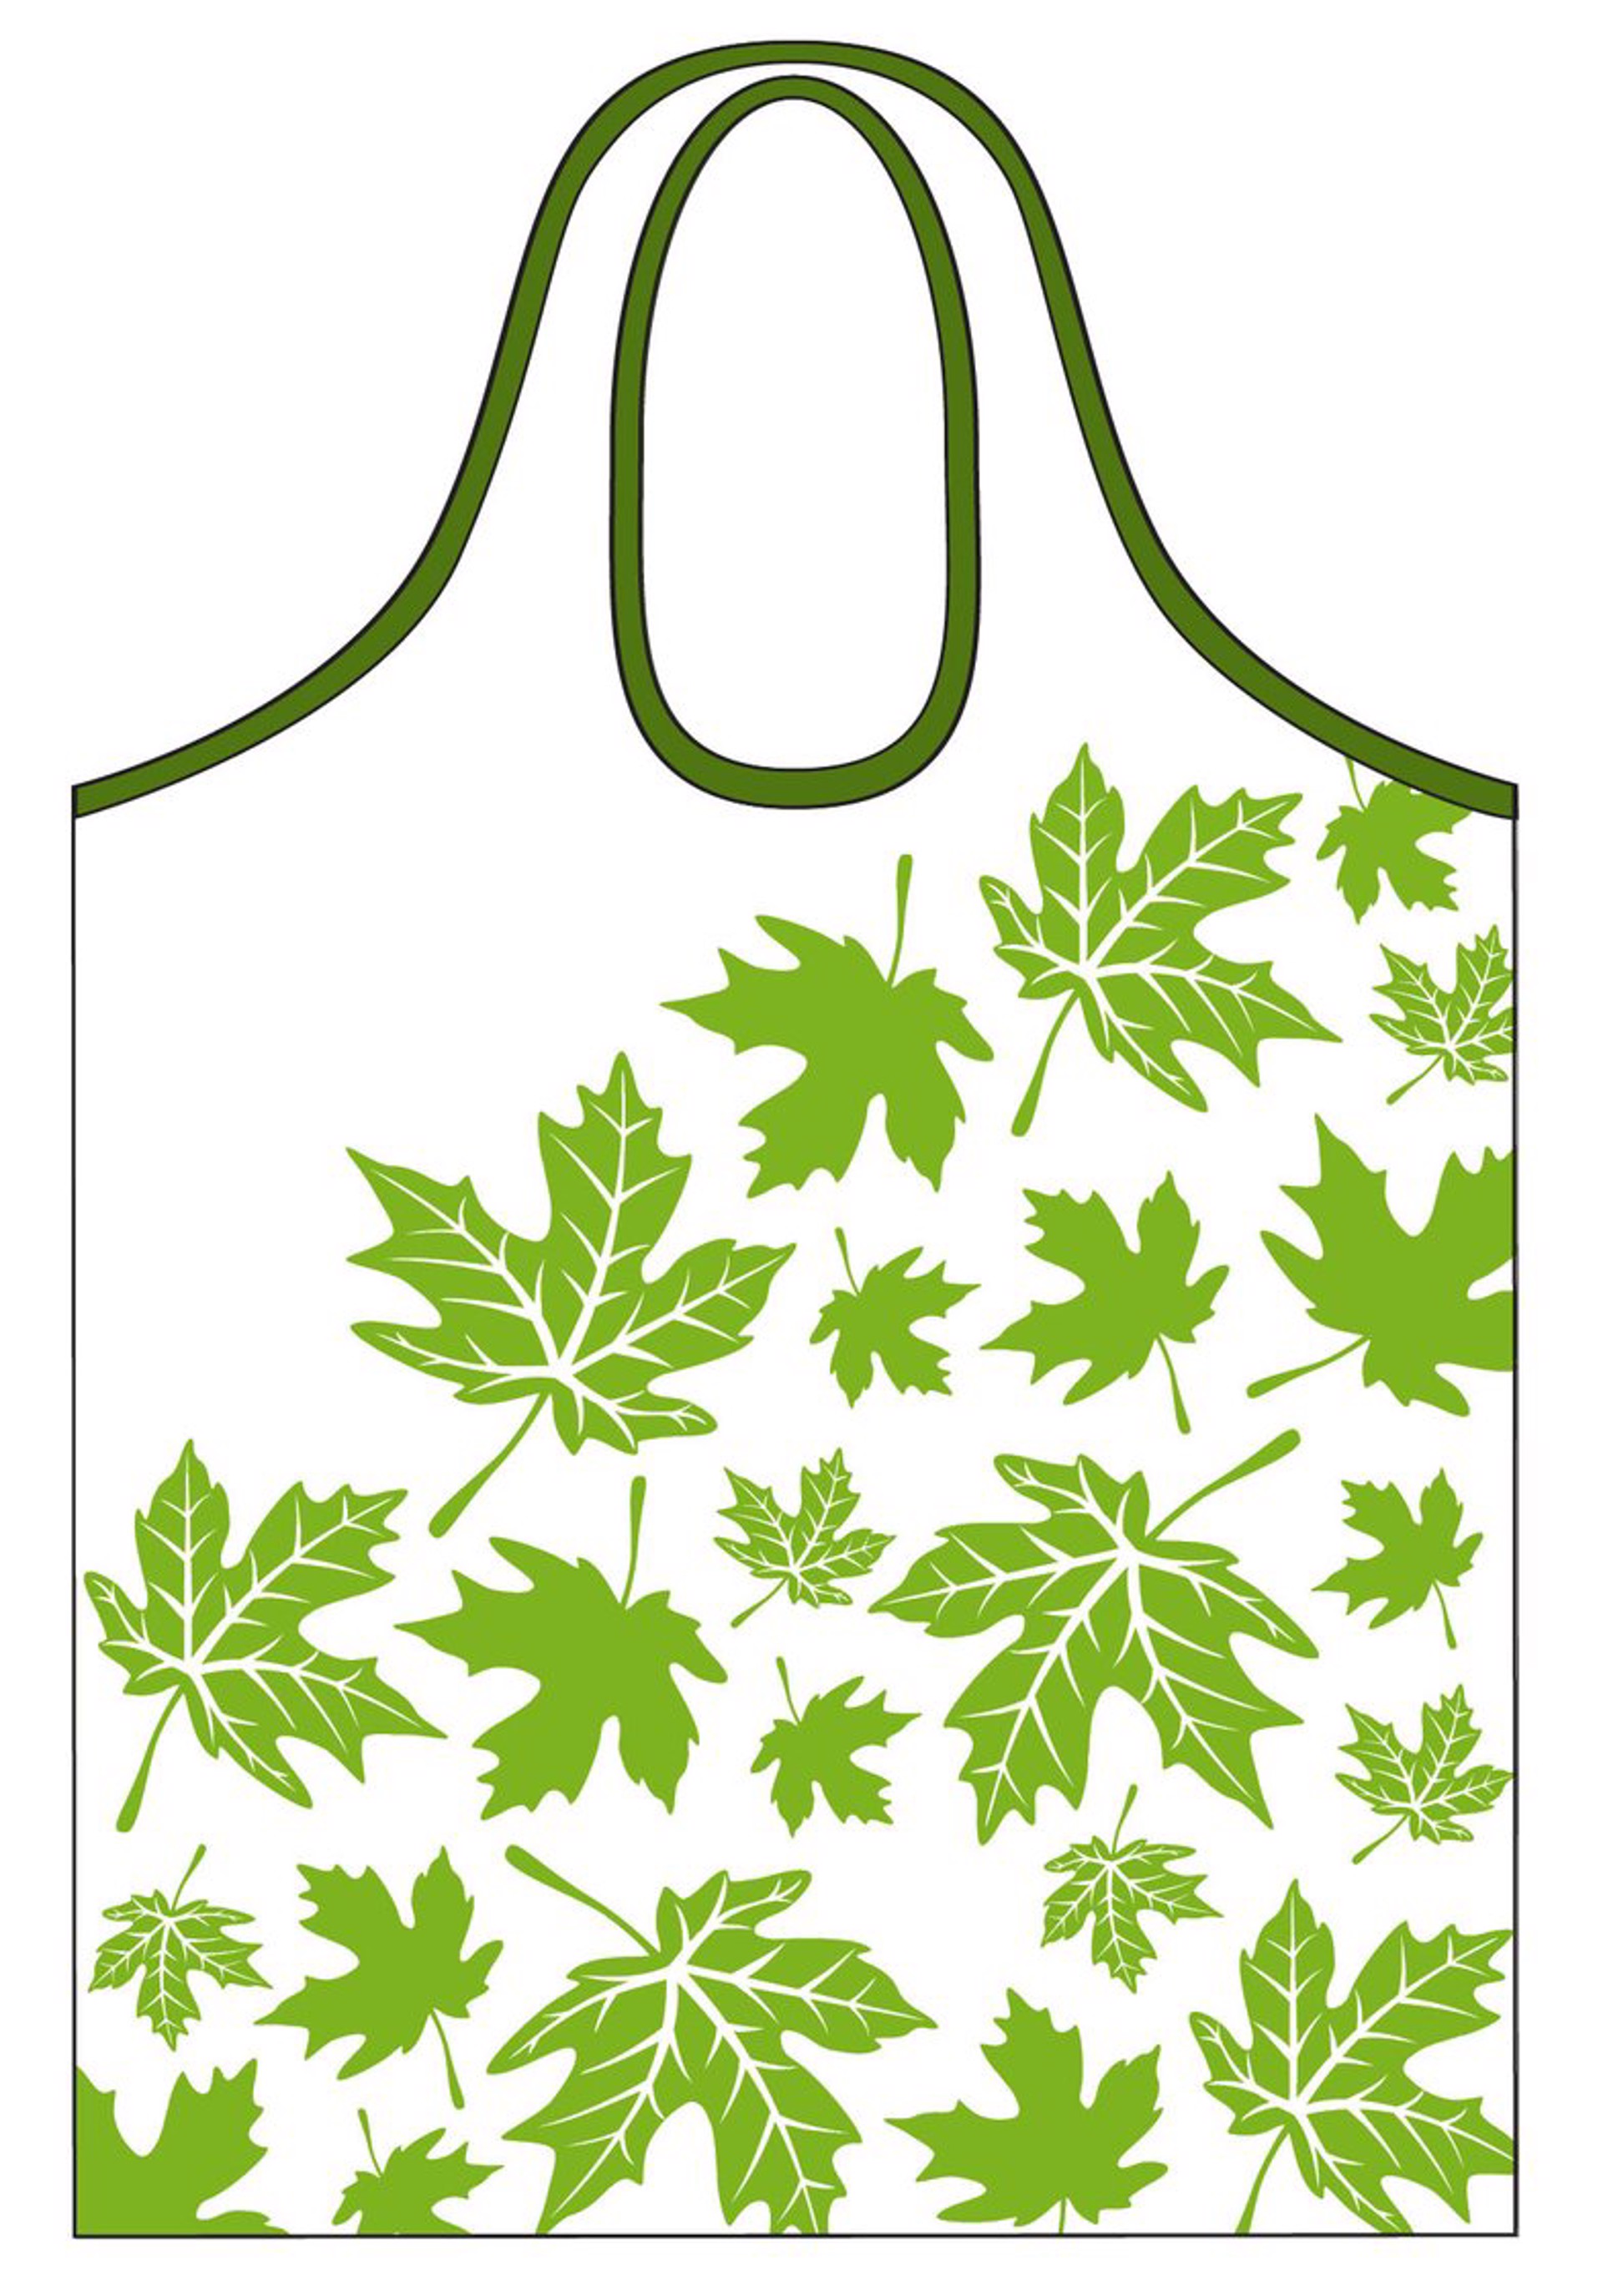 Maple Leaf I was a water bottle bag